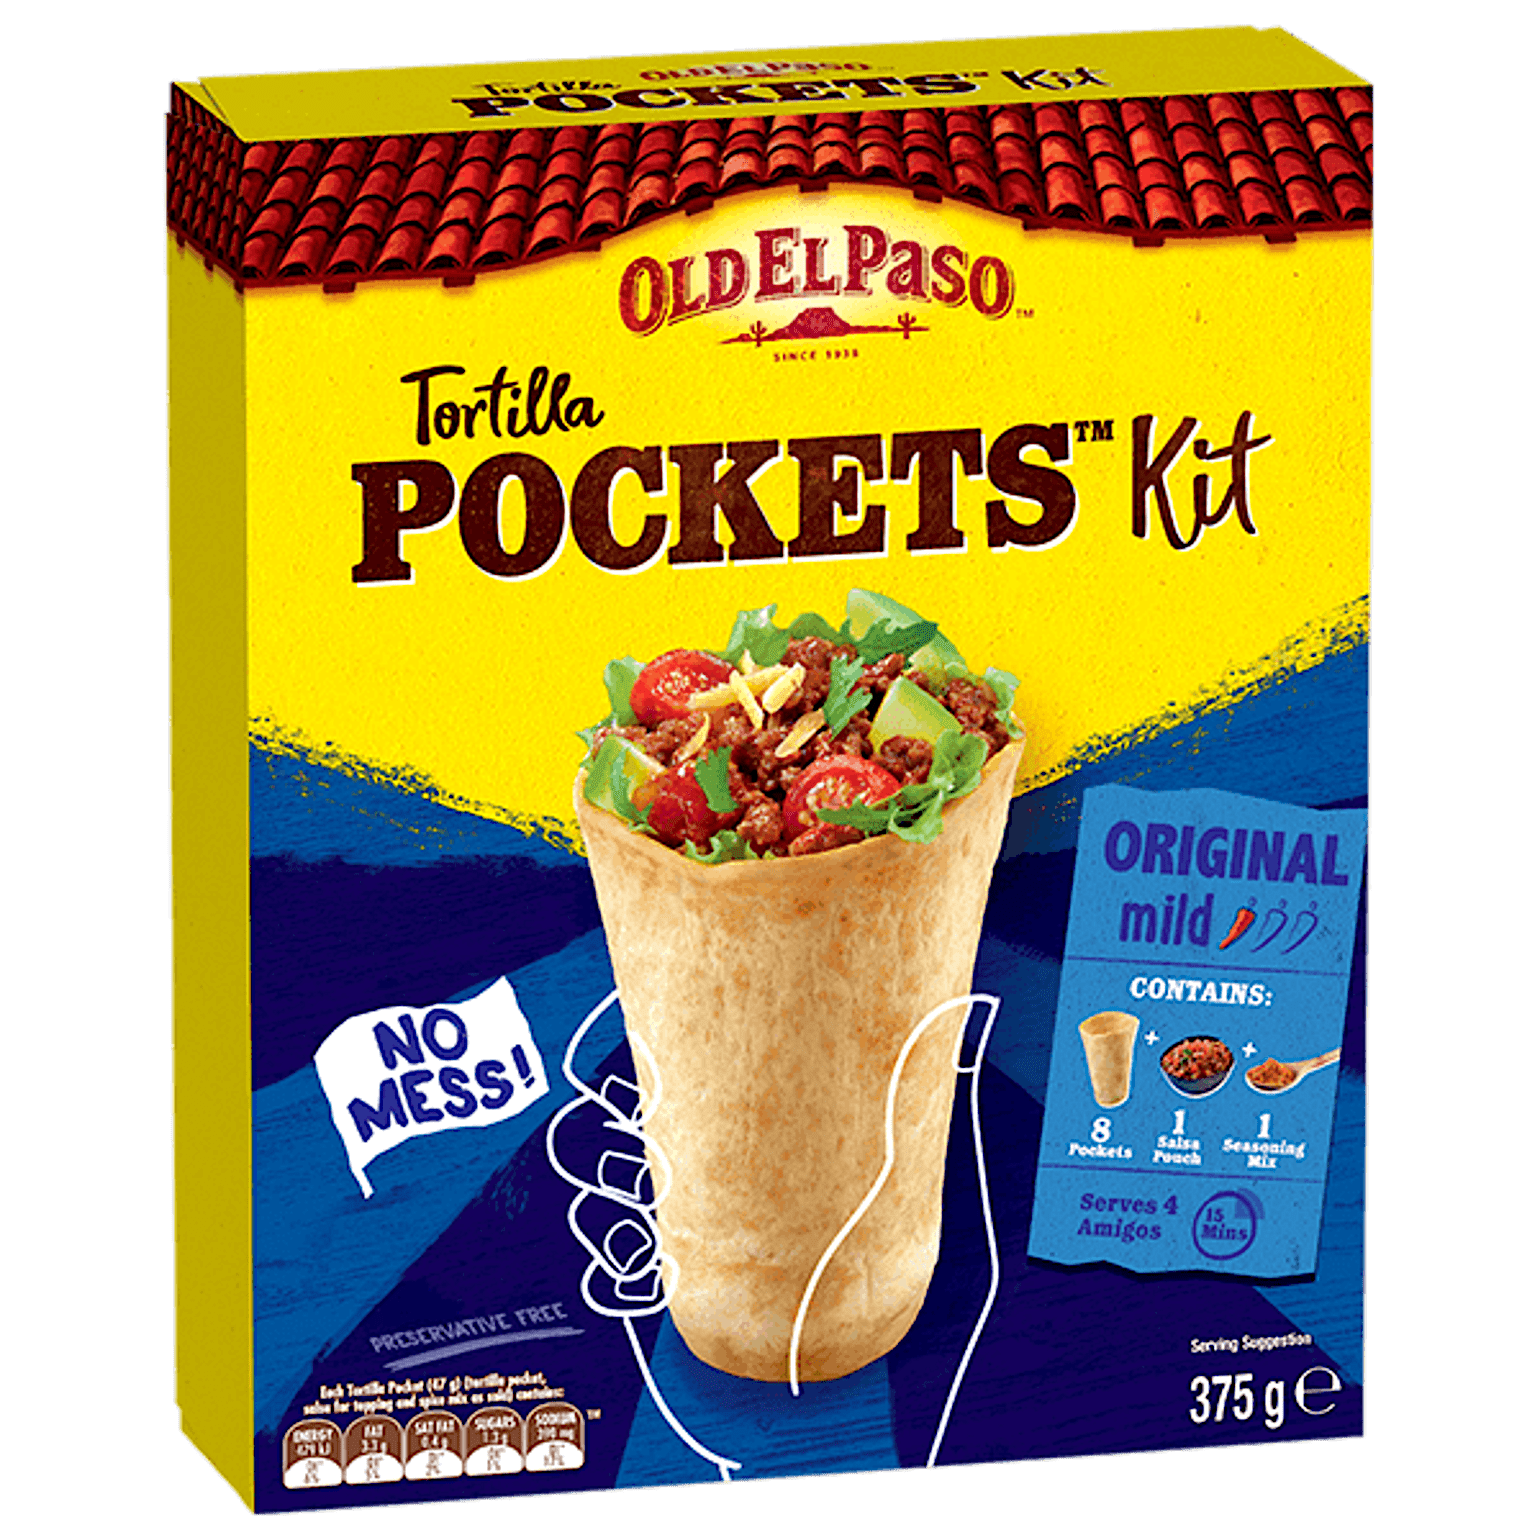 a pack of Old El Paso's mild tortilla pockets kit containing tortilla pockets, salsa pouch & seasoning mix (375g)